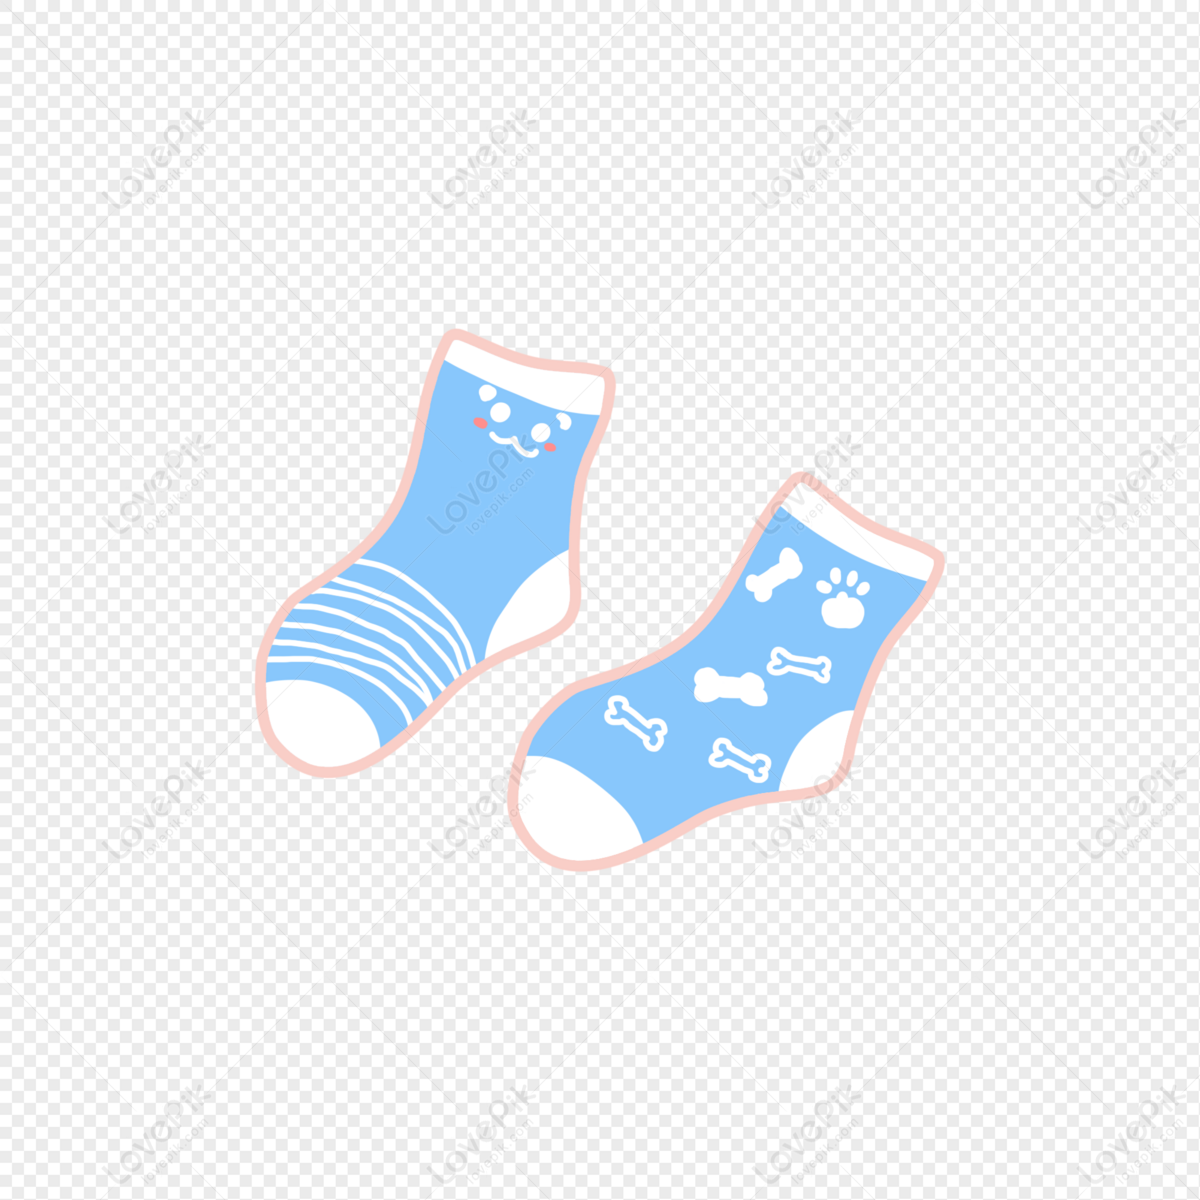 Baby Socks PNG Transparent Images Free Download